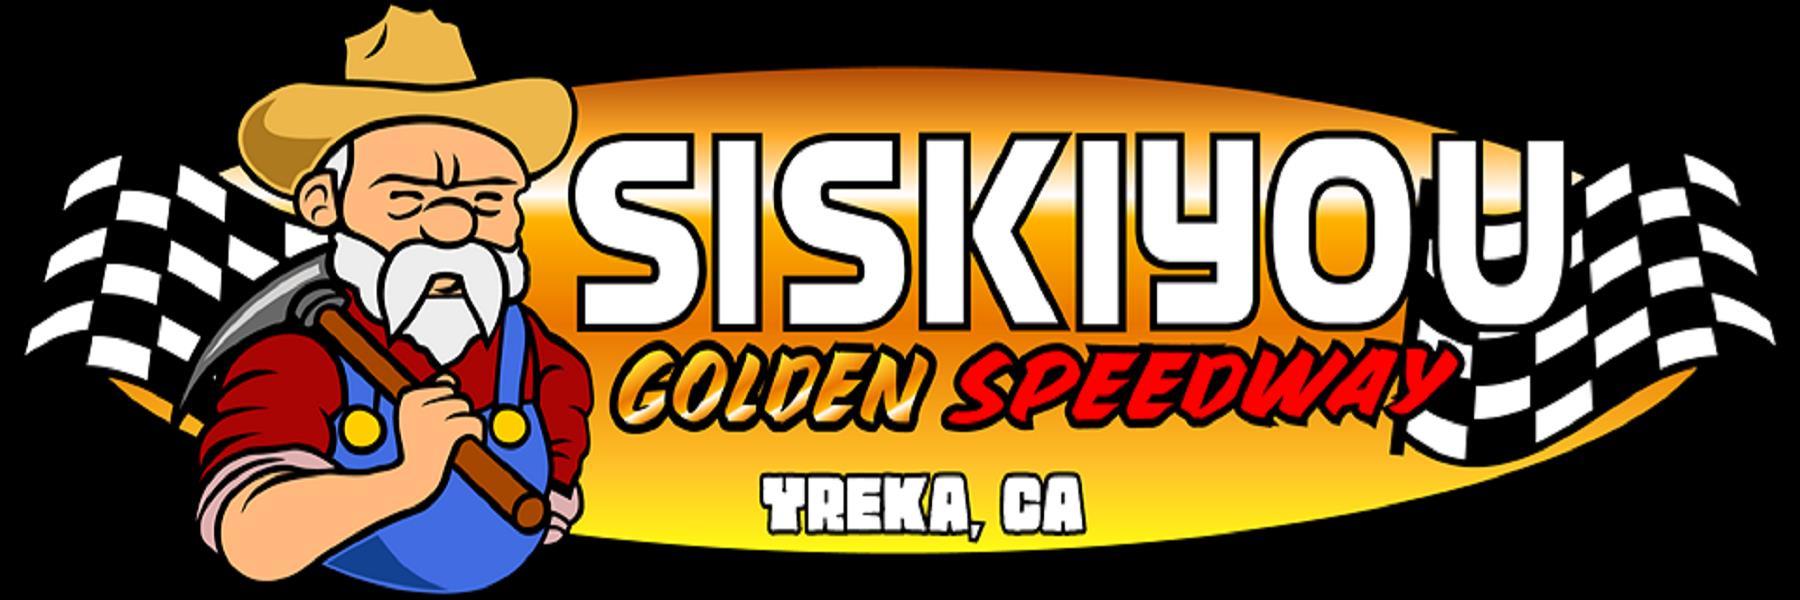 7/8/2022 - Siskiyou Golden Speedway